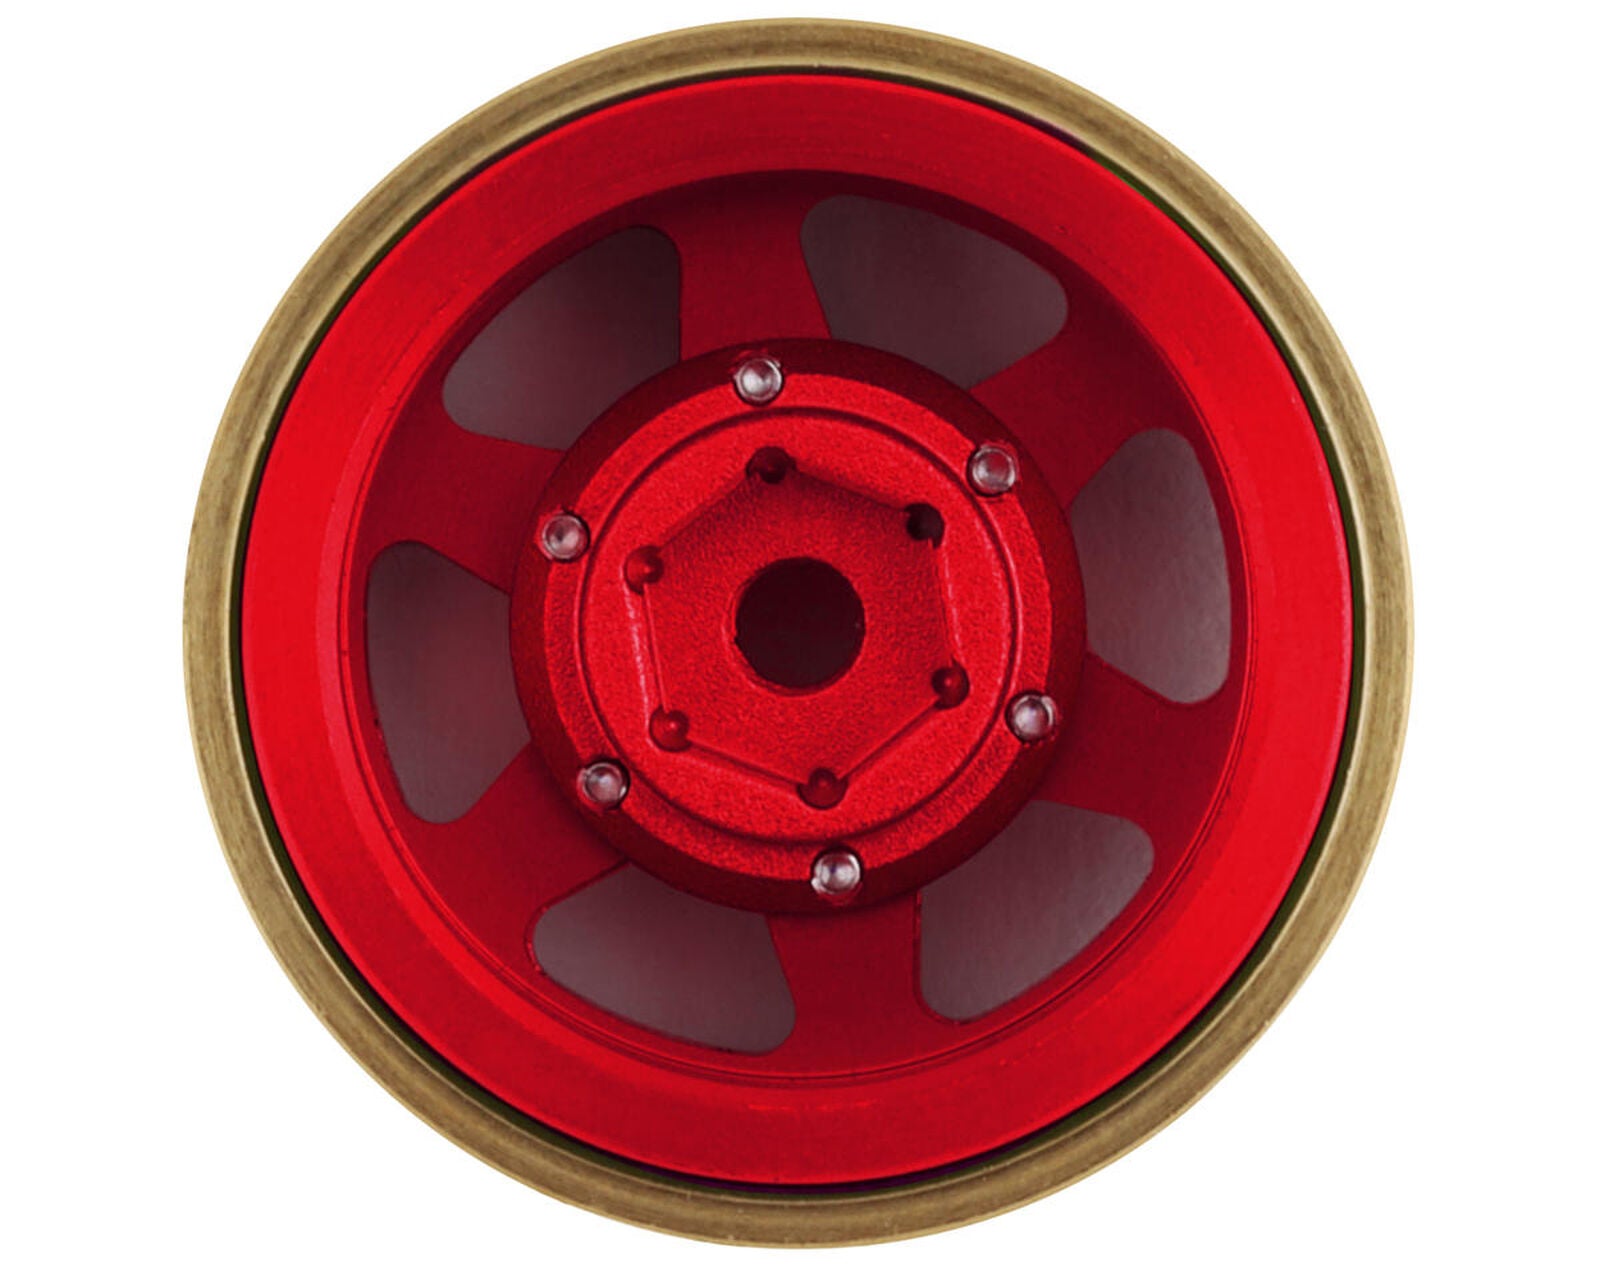 SCX24 Aluminum & Brass Adjustable Offset 1.0" Beadlock Wheels (Red) (4) (23.75g)